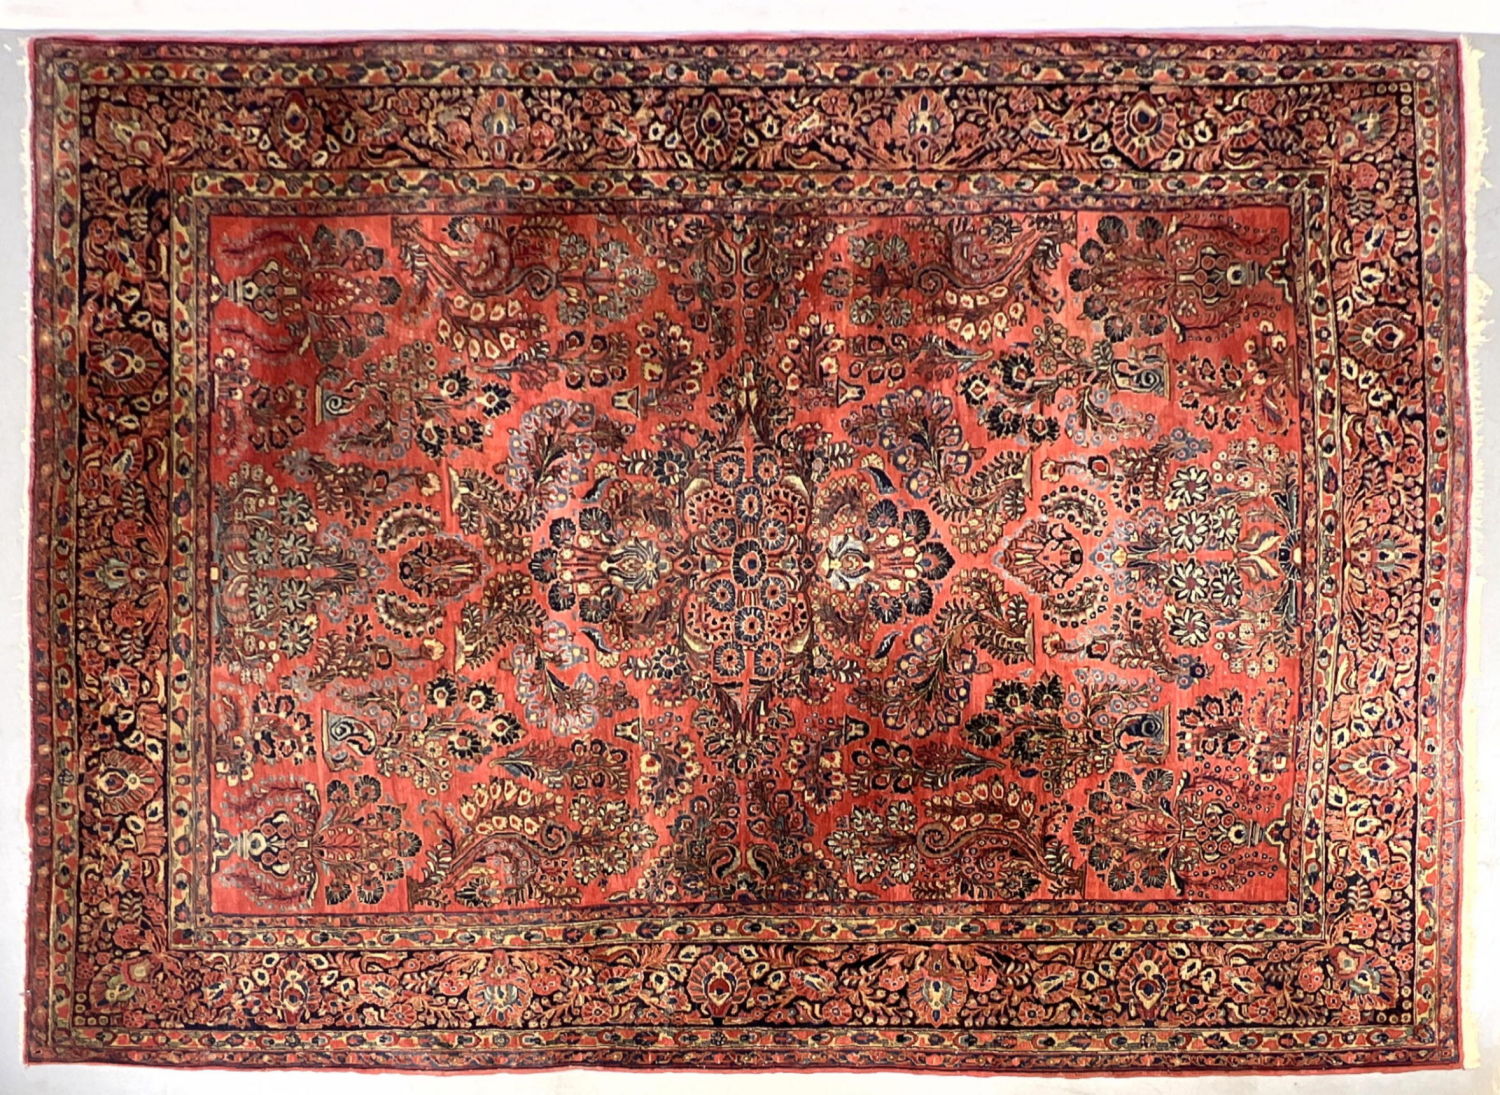 142 x 106 Handmade Oriental Carpet 2fed85